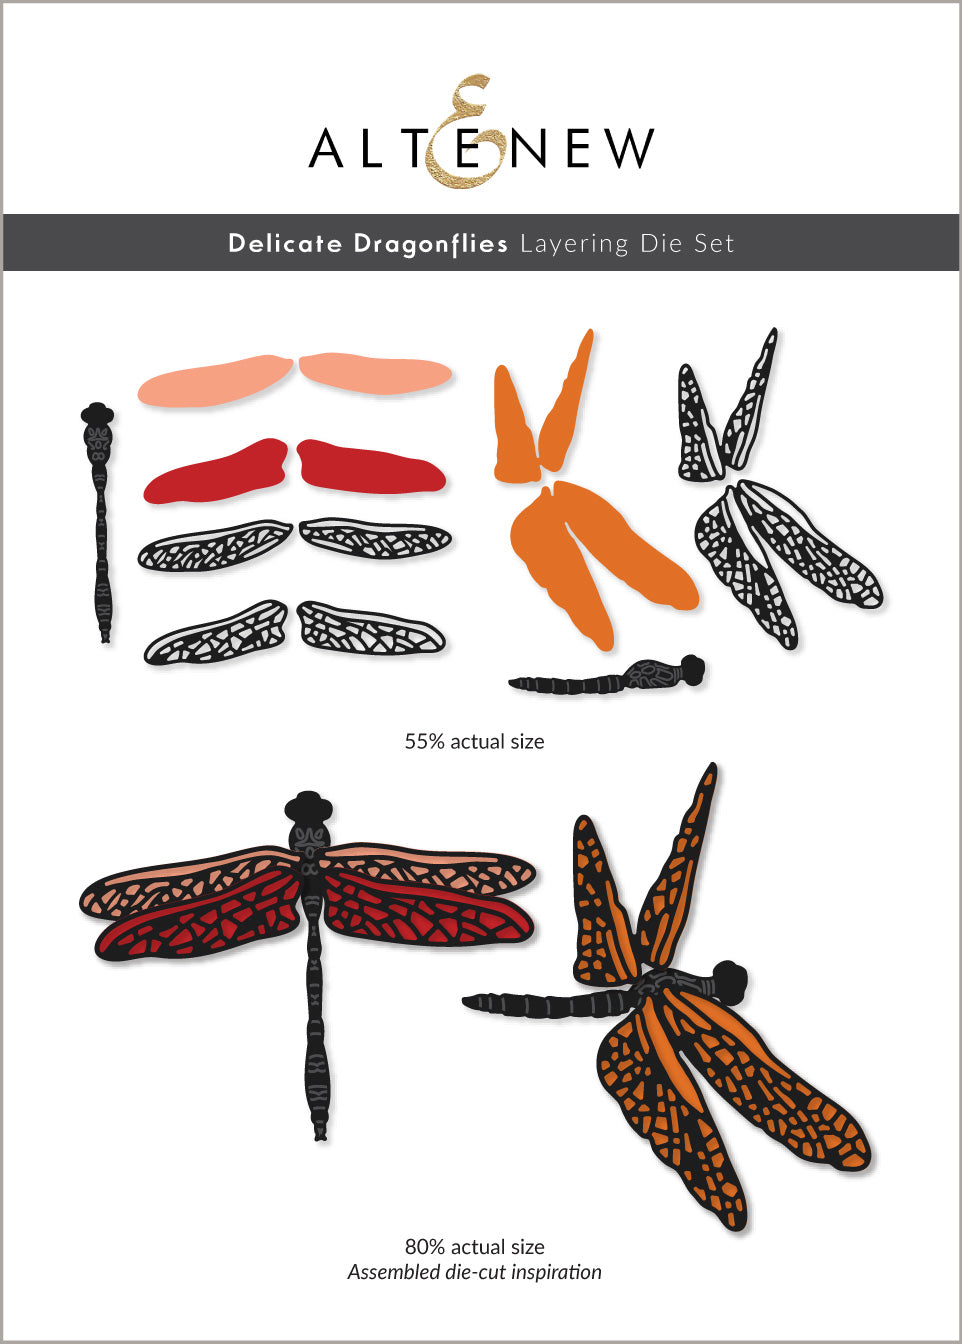 Die & Hot Foil Plate Bundle Delicate Dragonflies